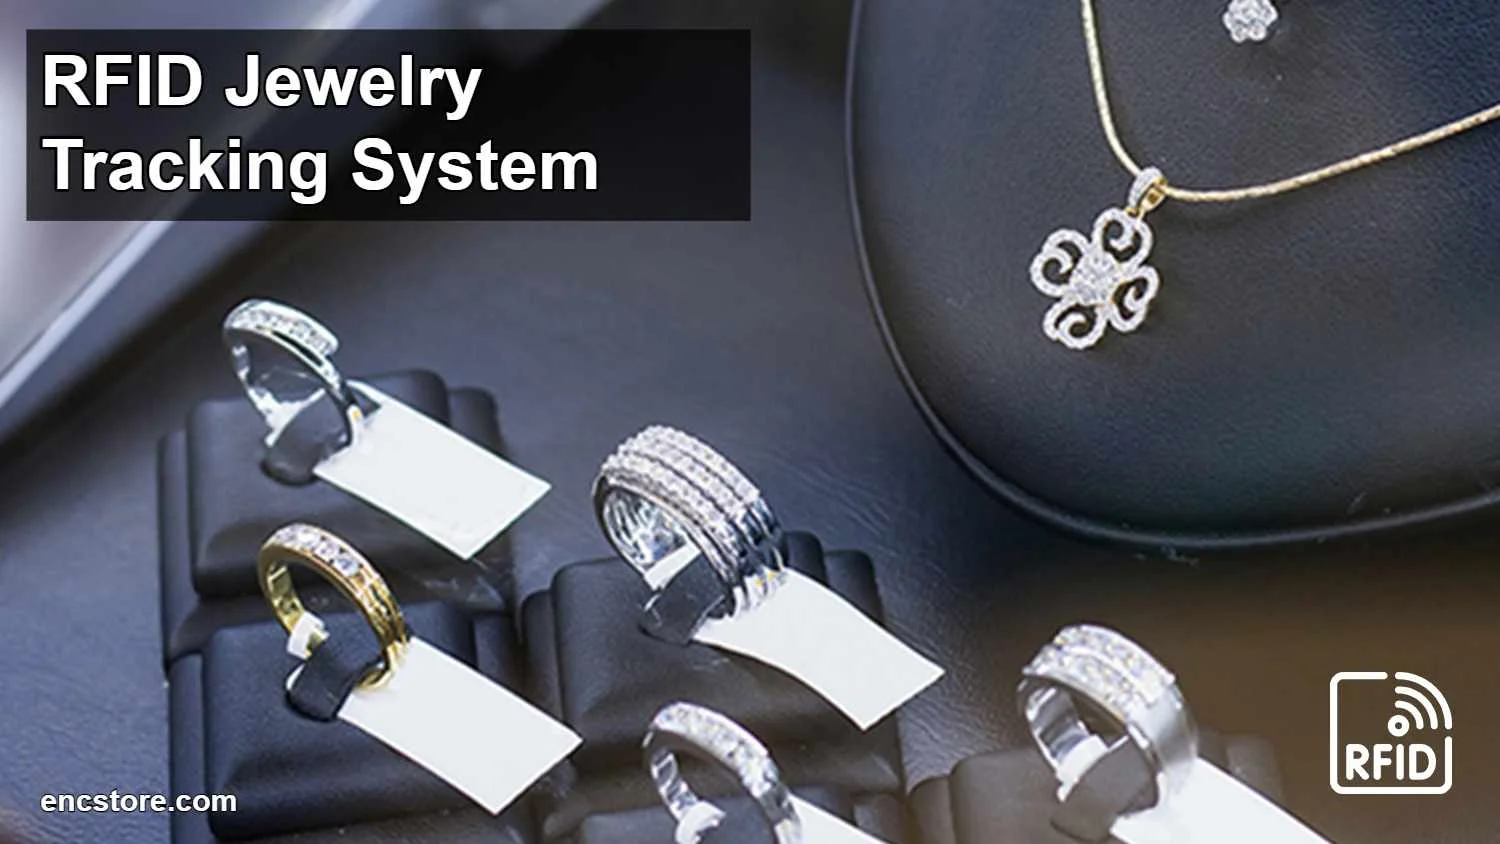 RFID Jewelry Tracking System